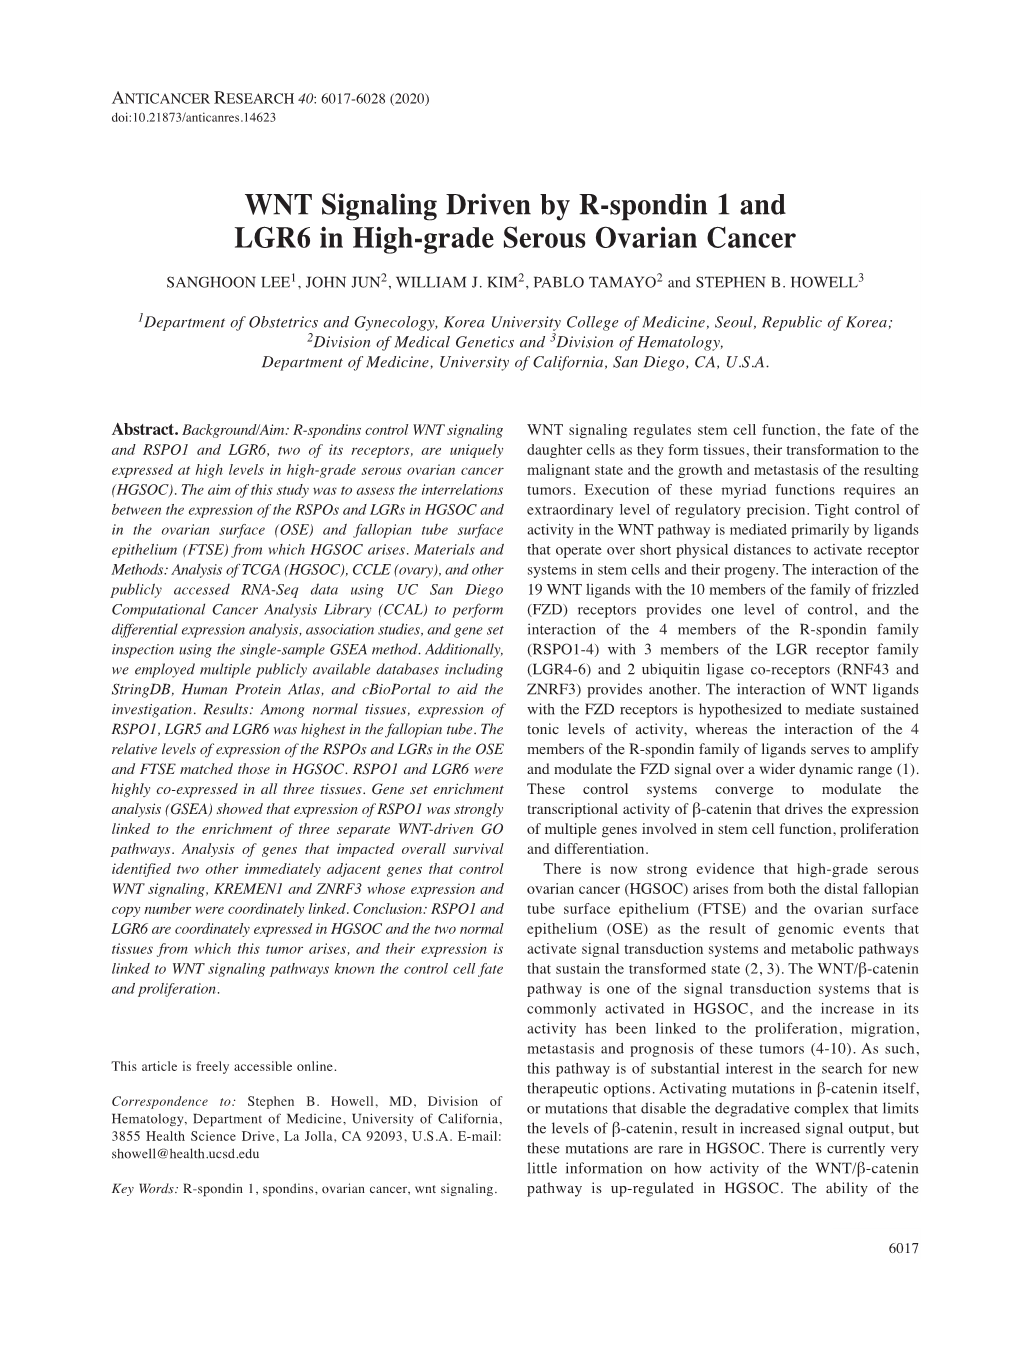 WNT Signaling Driven by R-Spondin 1 and LGR6 in High-Grade Serous Ovarian Cancer SANGHOON LEE 1, JOHN JUN 2, WILLIAM J